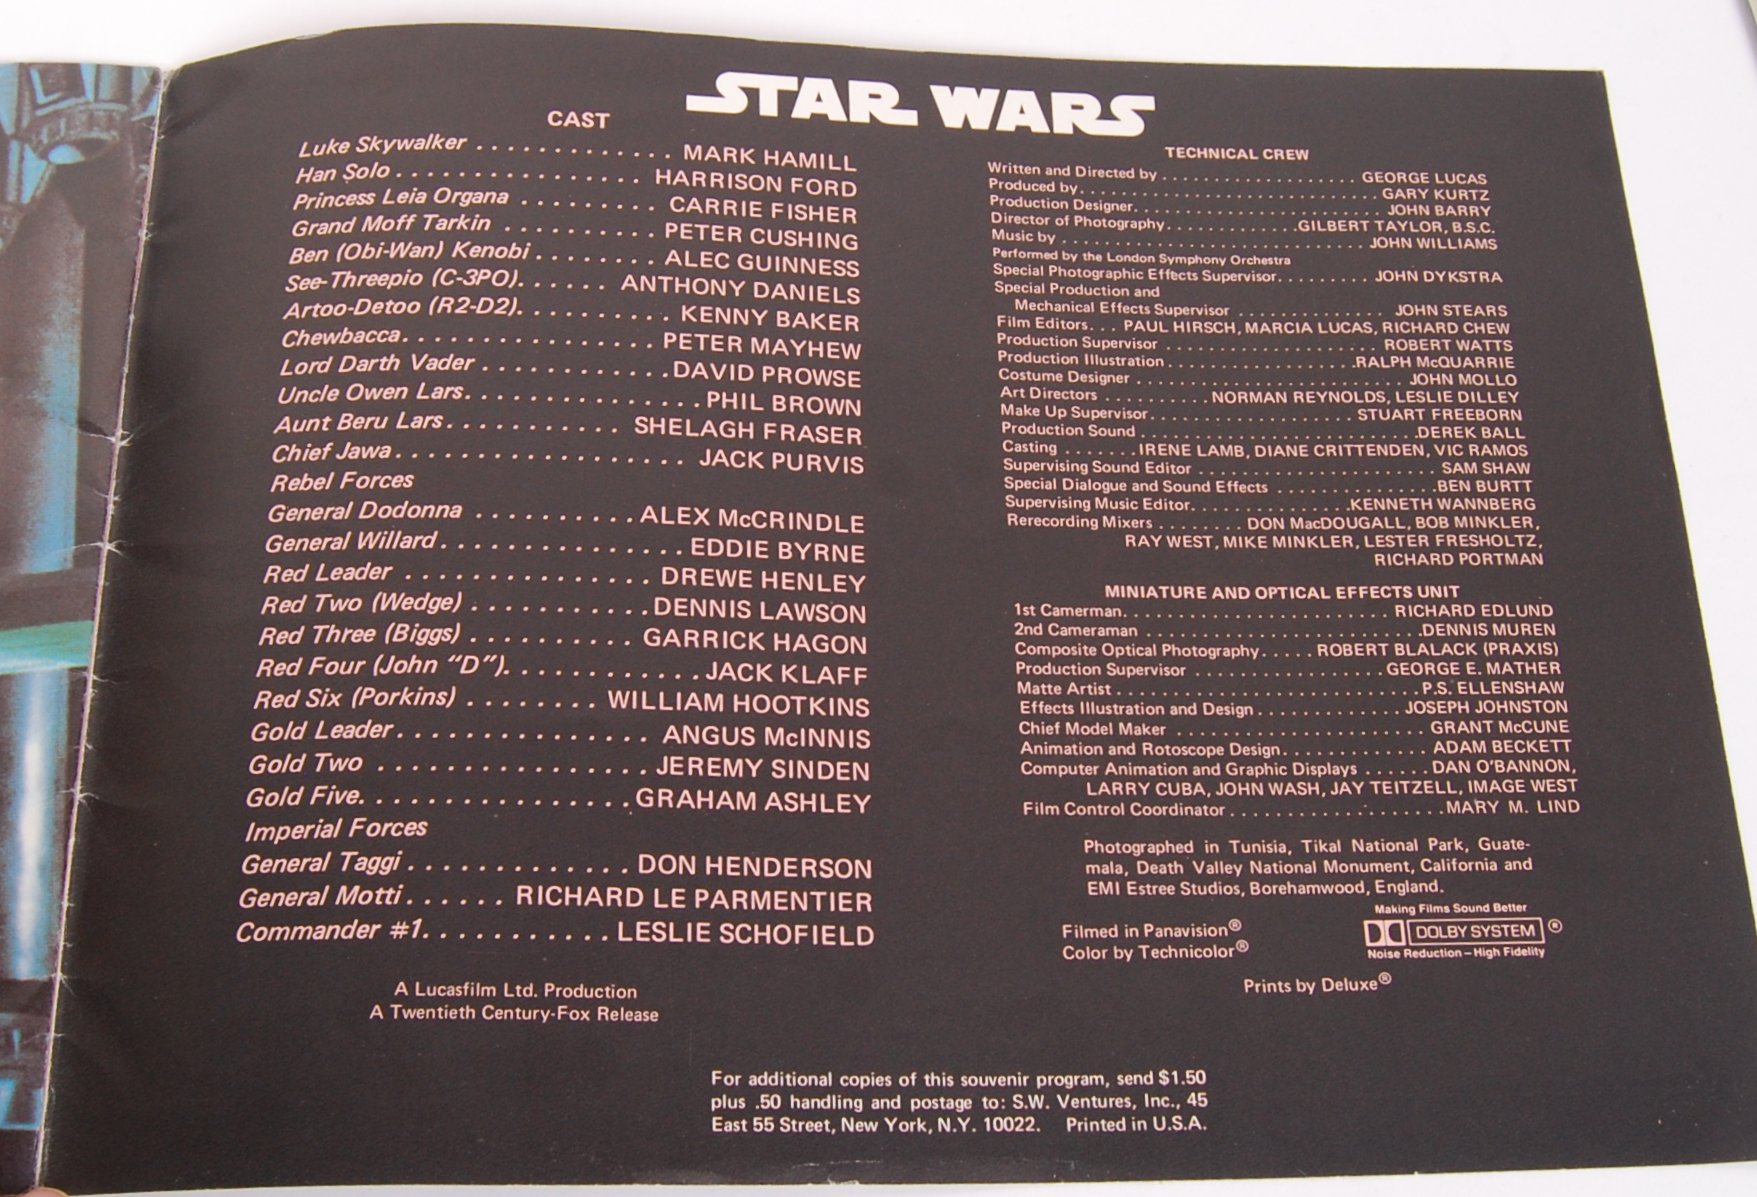 RARE ORIGINAL 1977 STAR WARS UK CINEMA RELEASE BROCHURE - Image 4 of 4